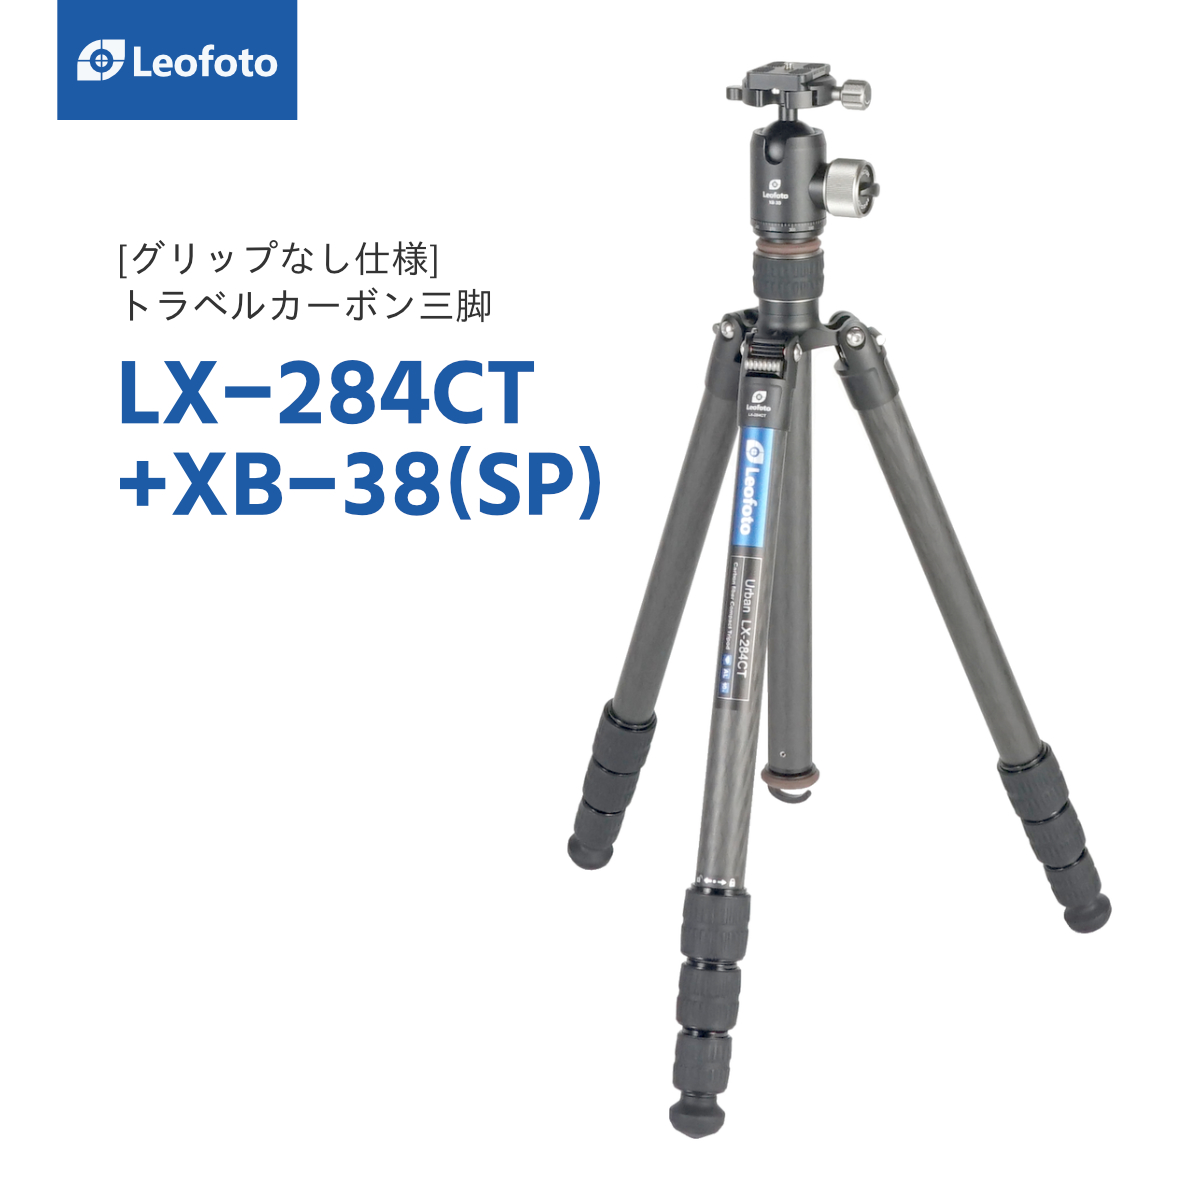 Leofoto LY-224C+LH-25R(BK) ブラック Mr.Yシリーズ 三脚+雲台セット